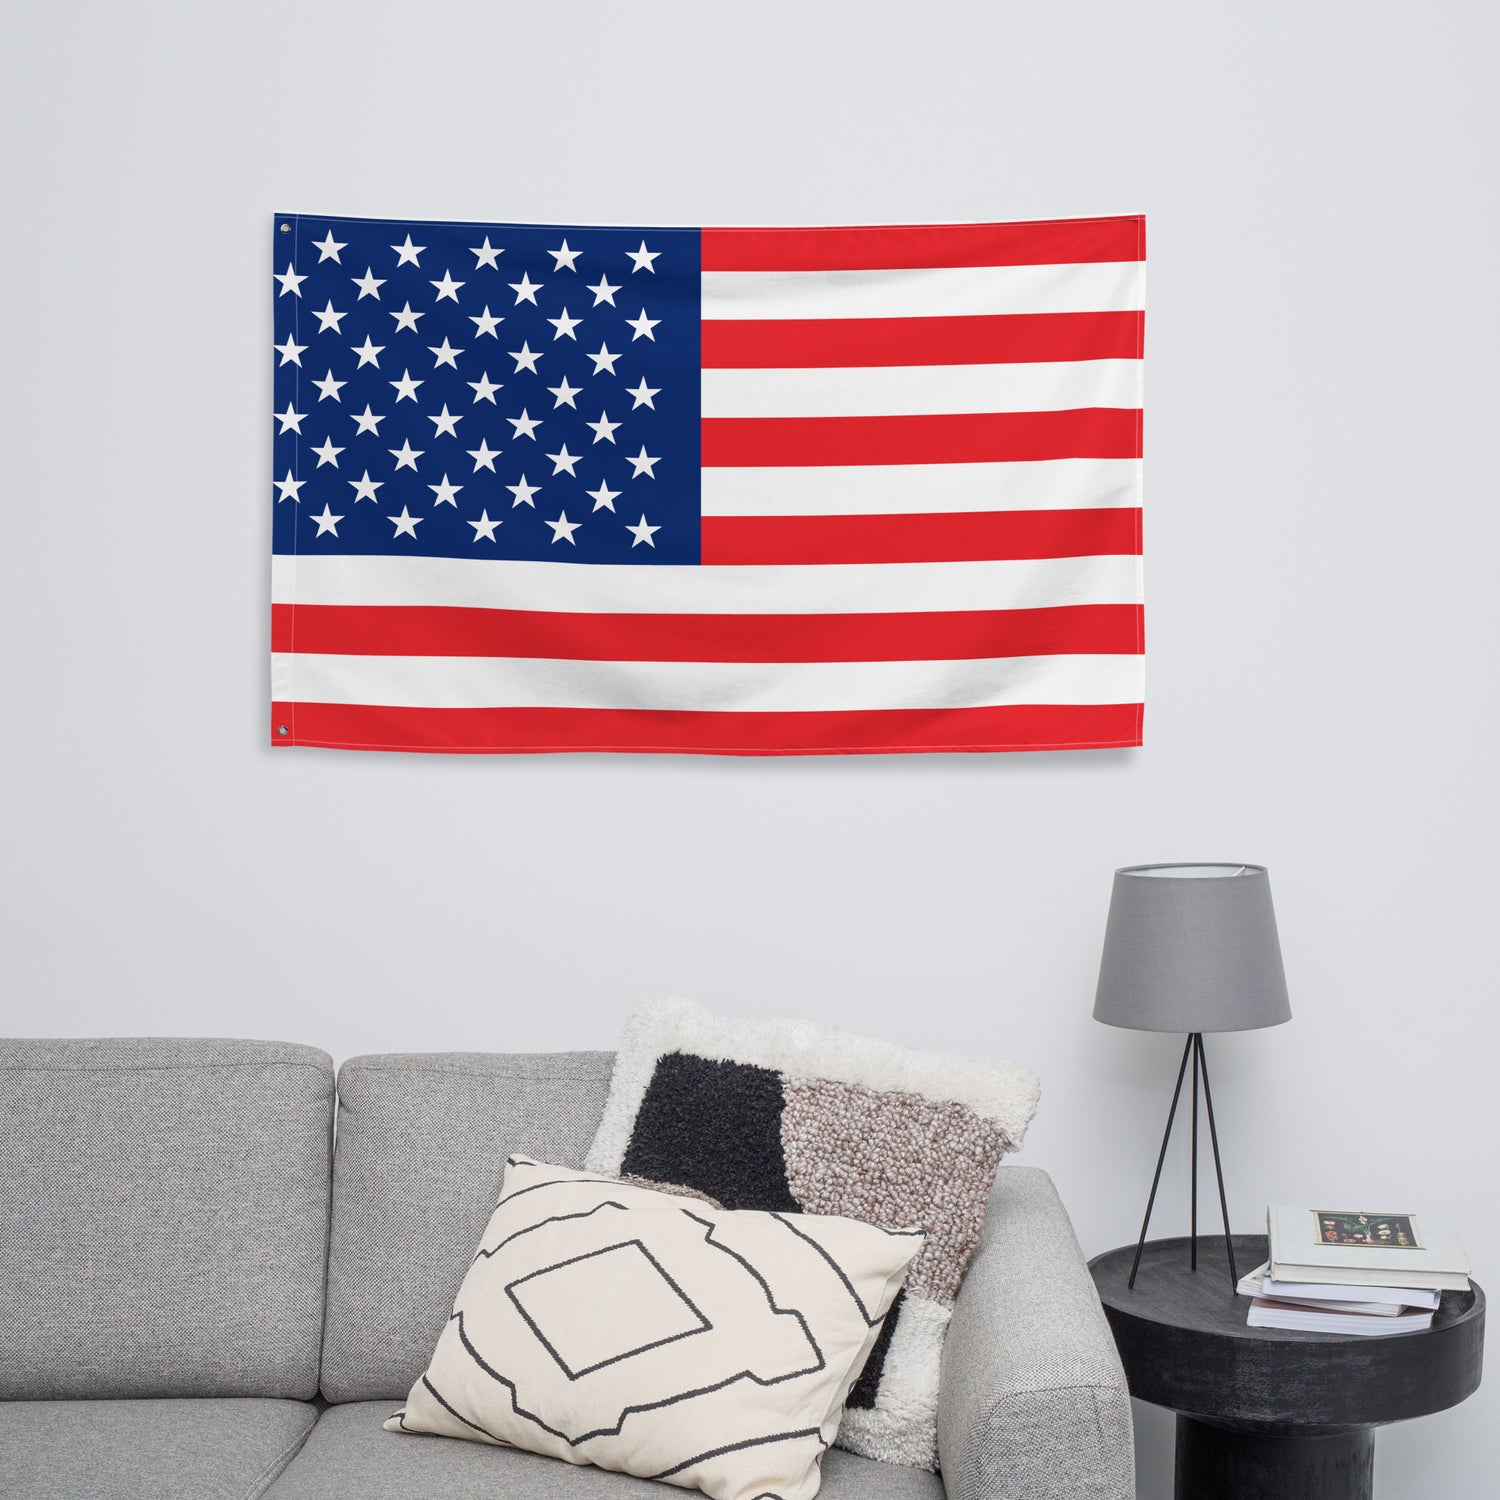 U.S.A Flag Products